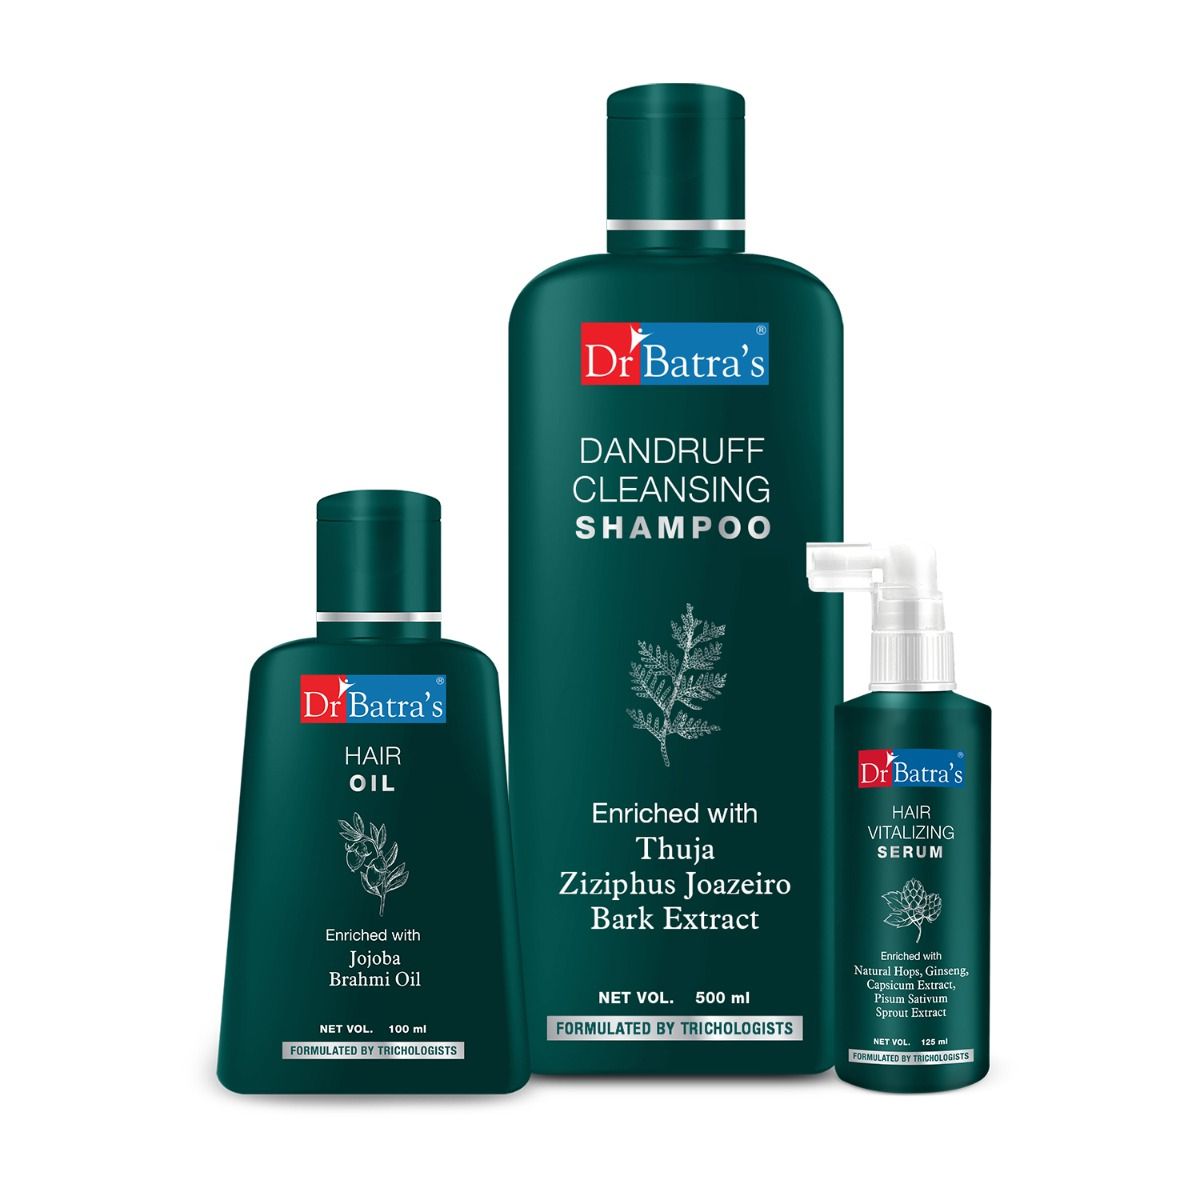     			Dr Batra's Hair Vitalizing Serum, Dandruff Cleansing Shampoo And Hair Oil (Pack Of 3)